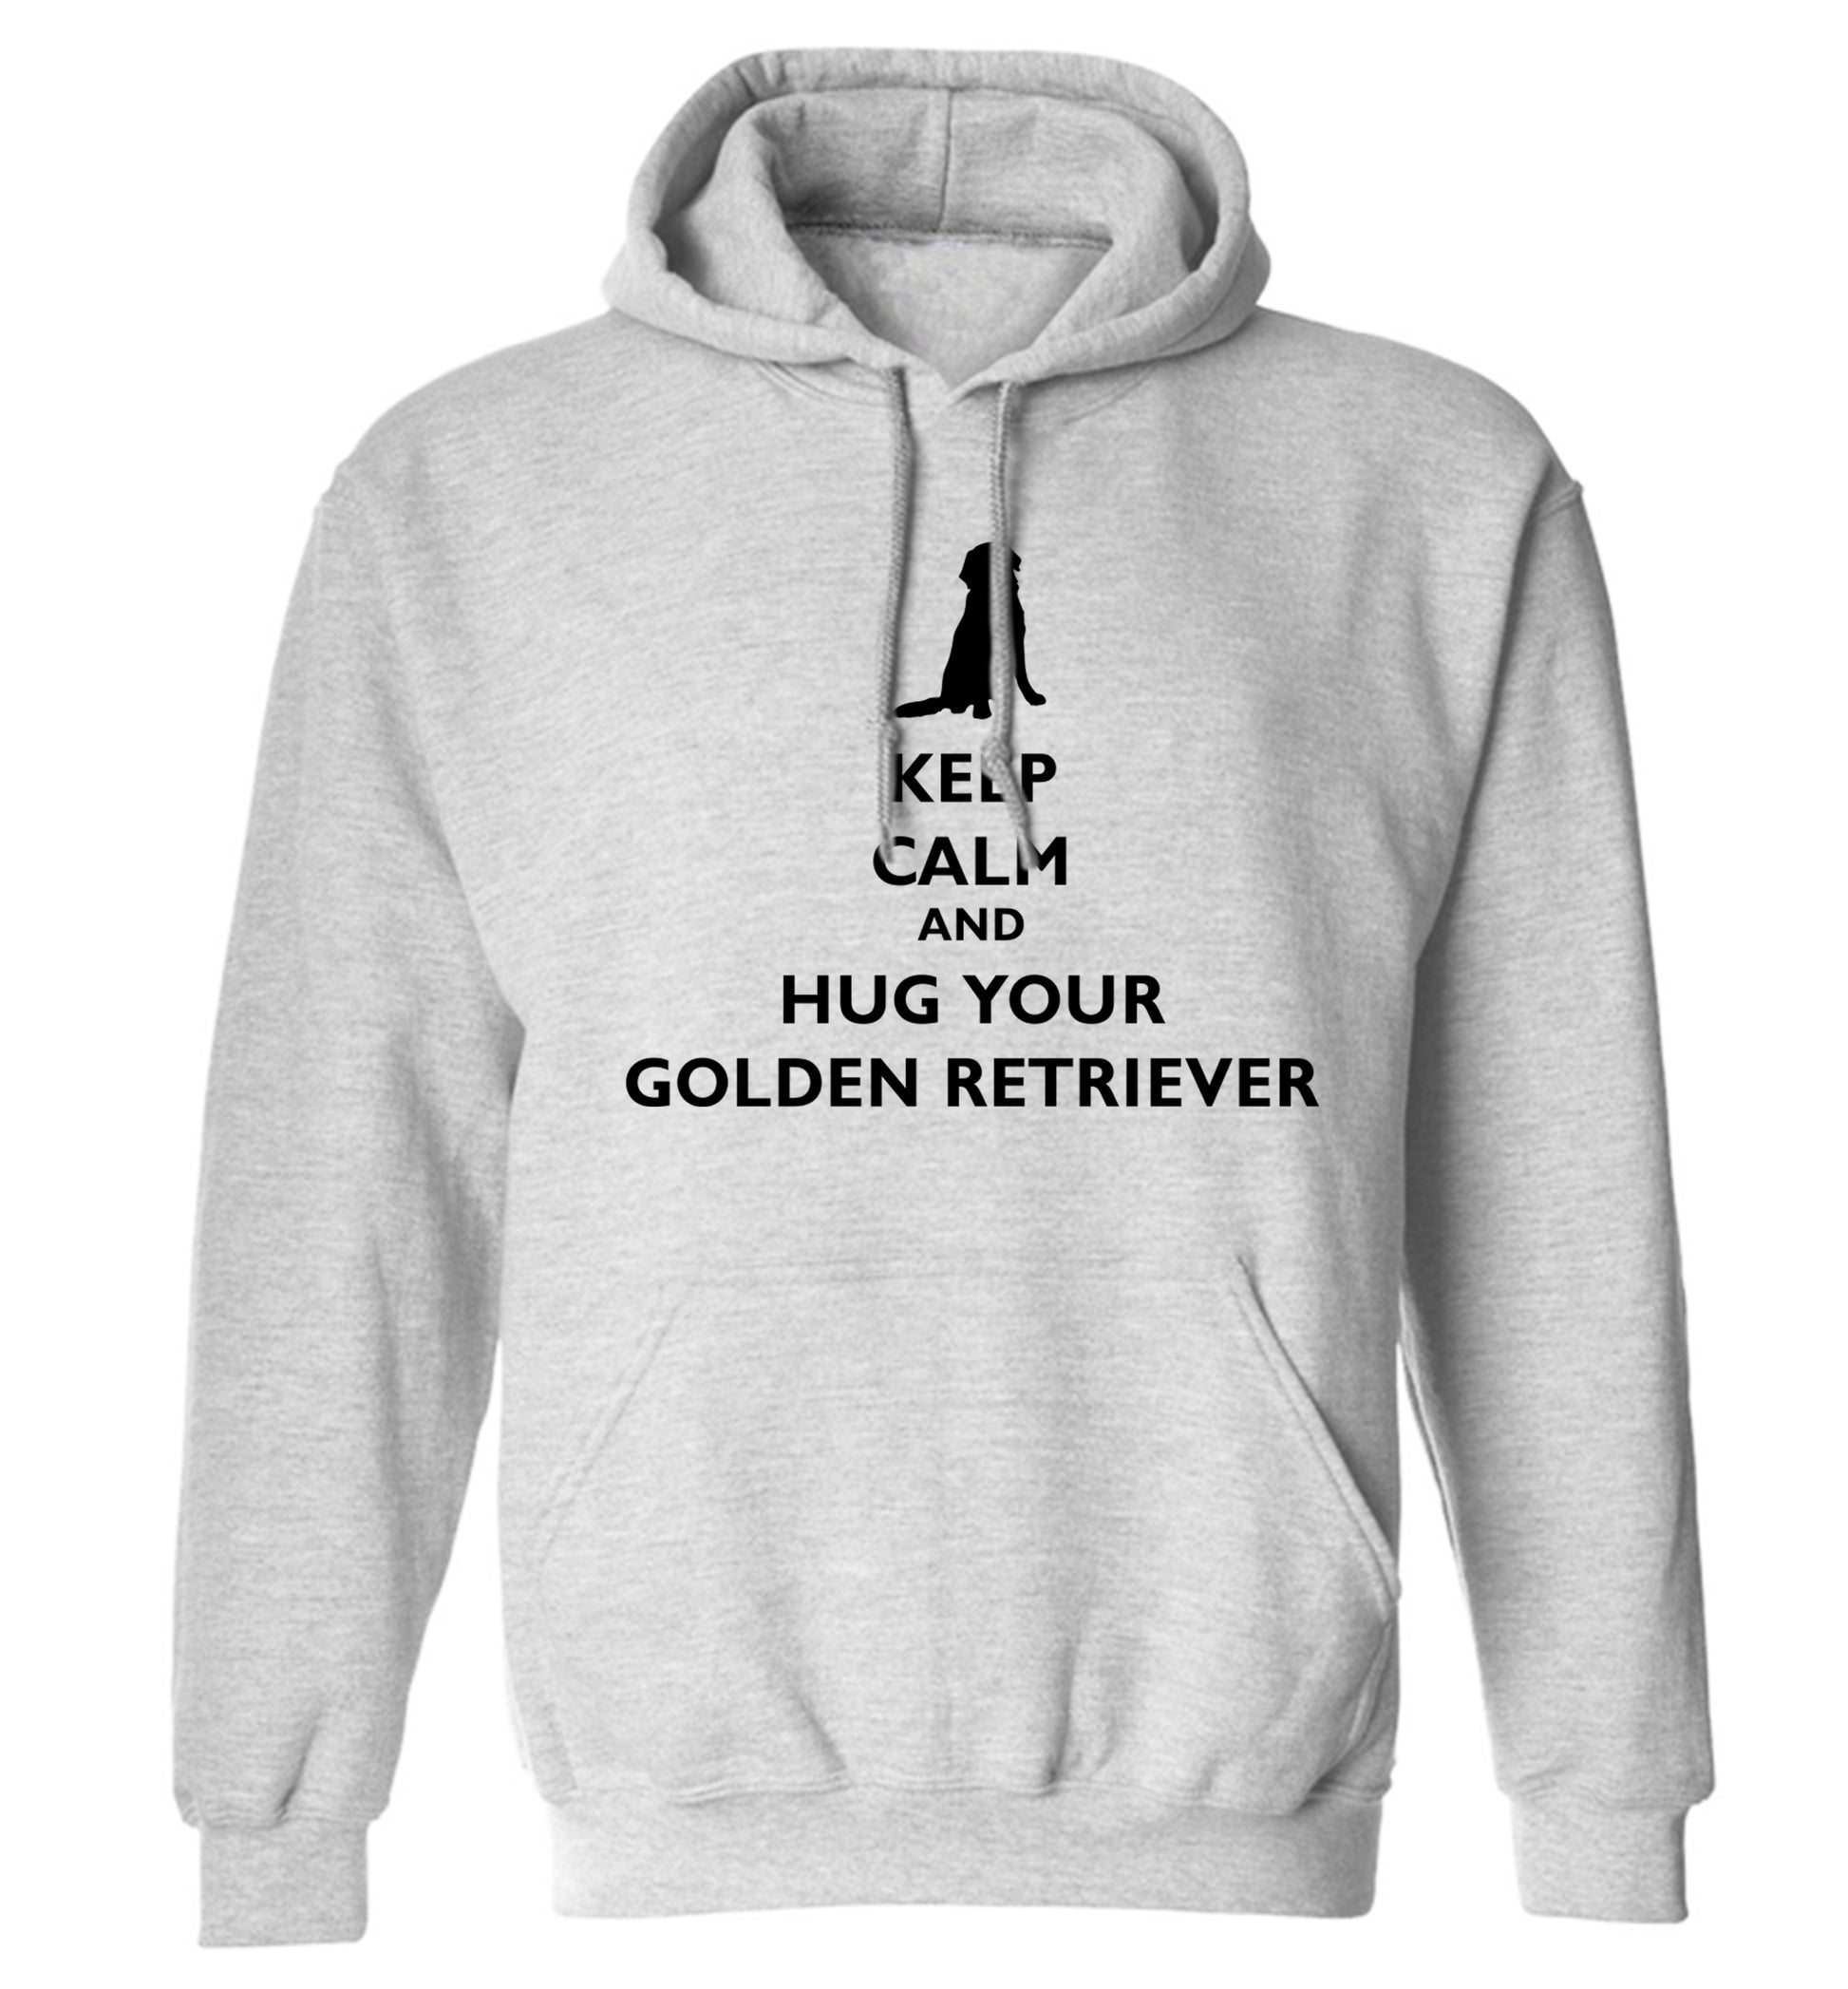 Keep calm and hug your golden retriever adults unisex grey hoodie 2XL